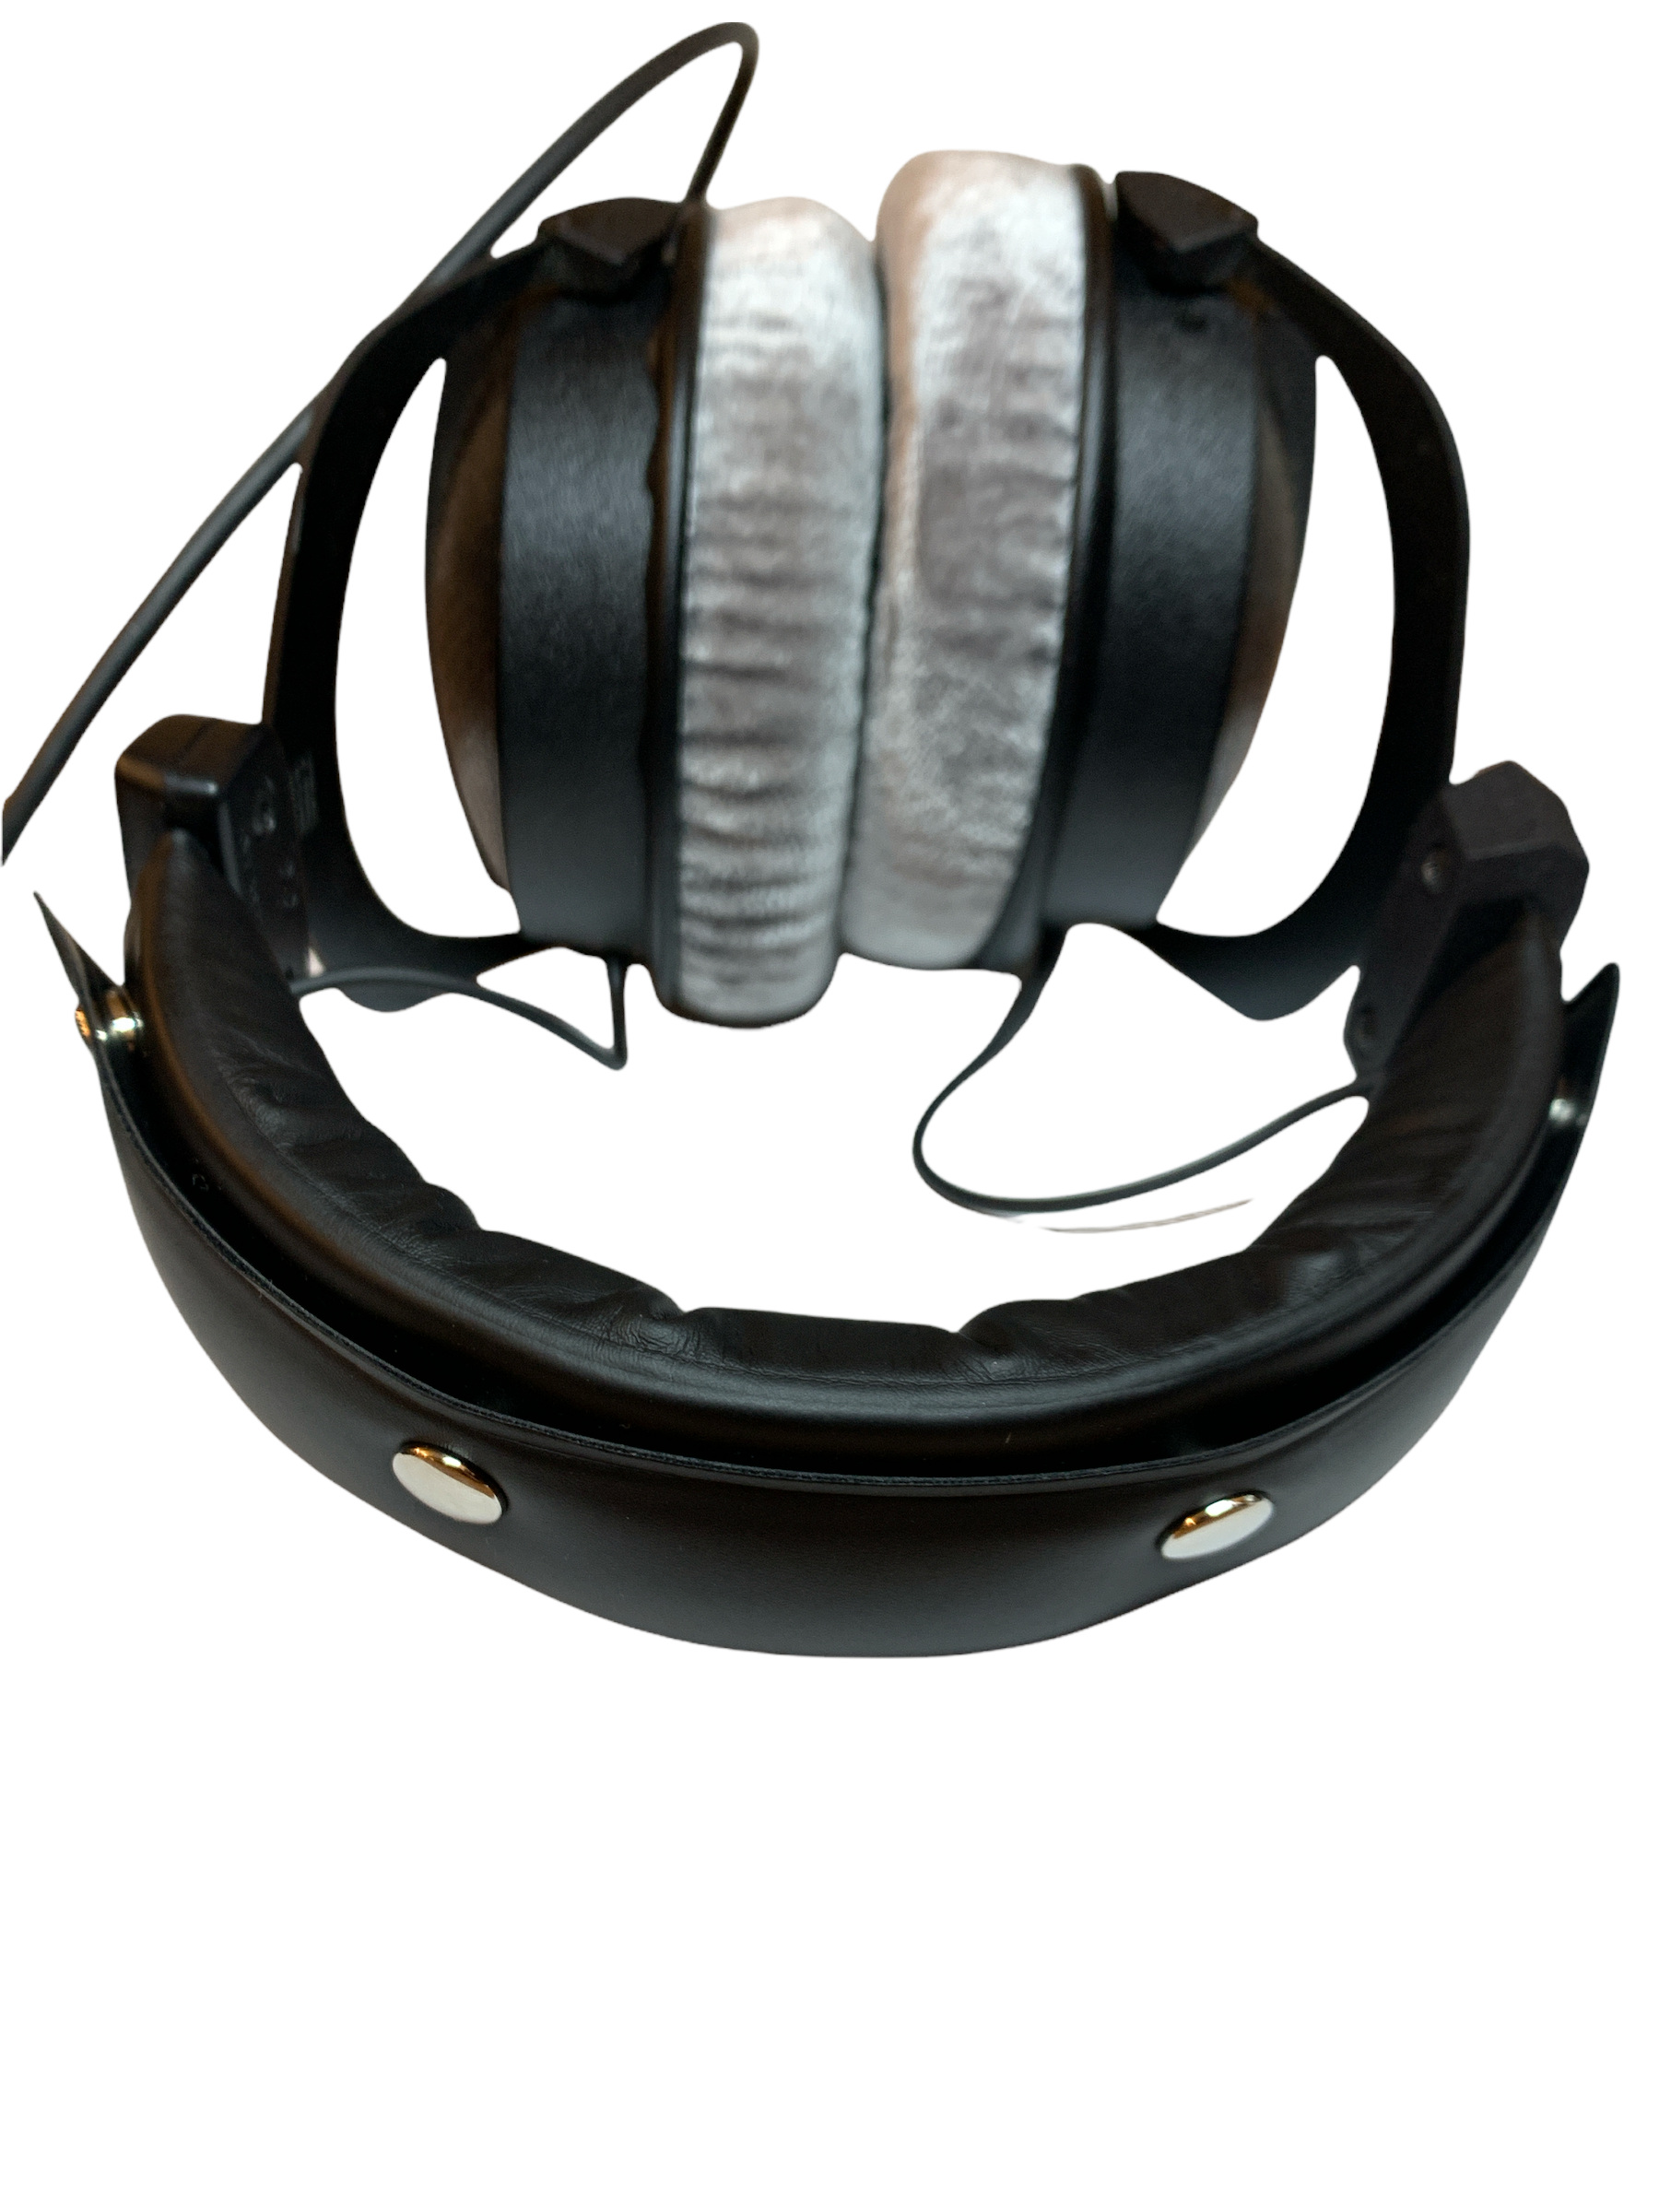 CentralSound Replacement Headband Pad for Beyerdynamic Headphones - CentralSound